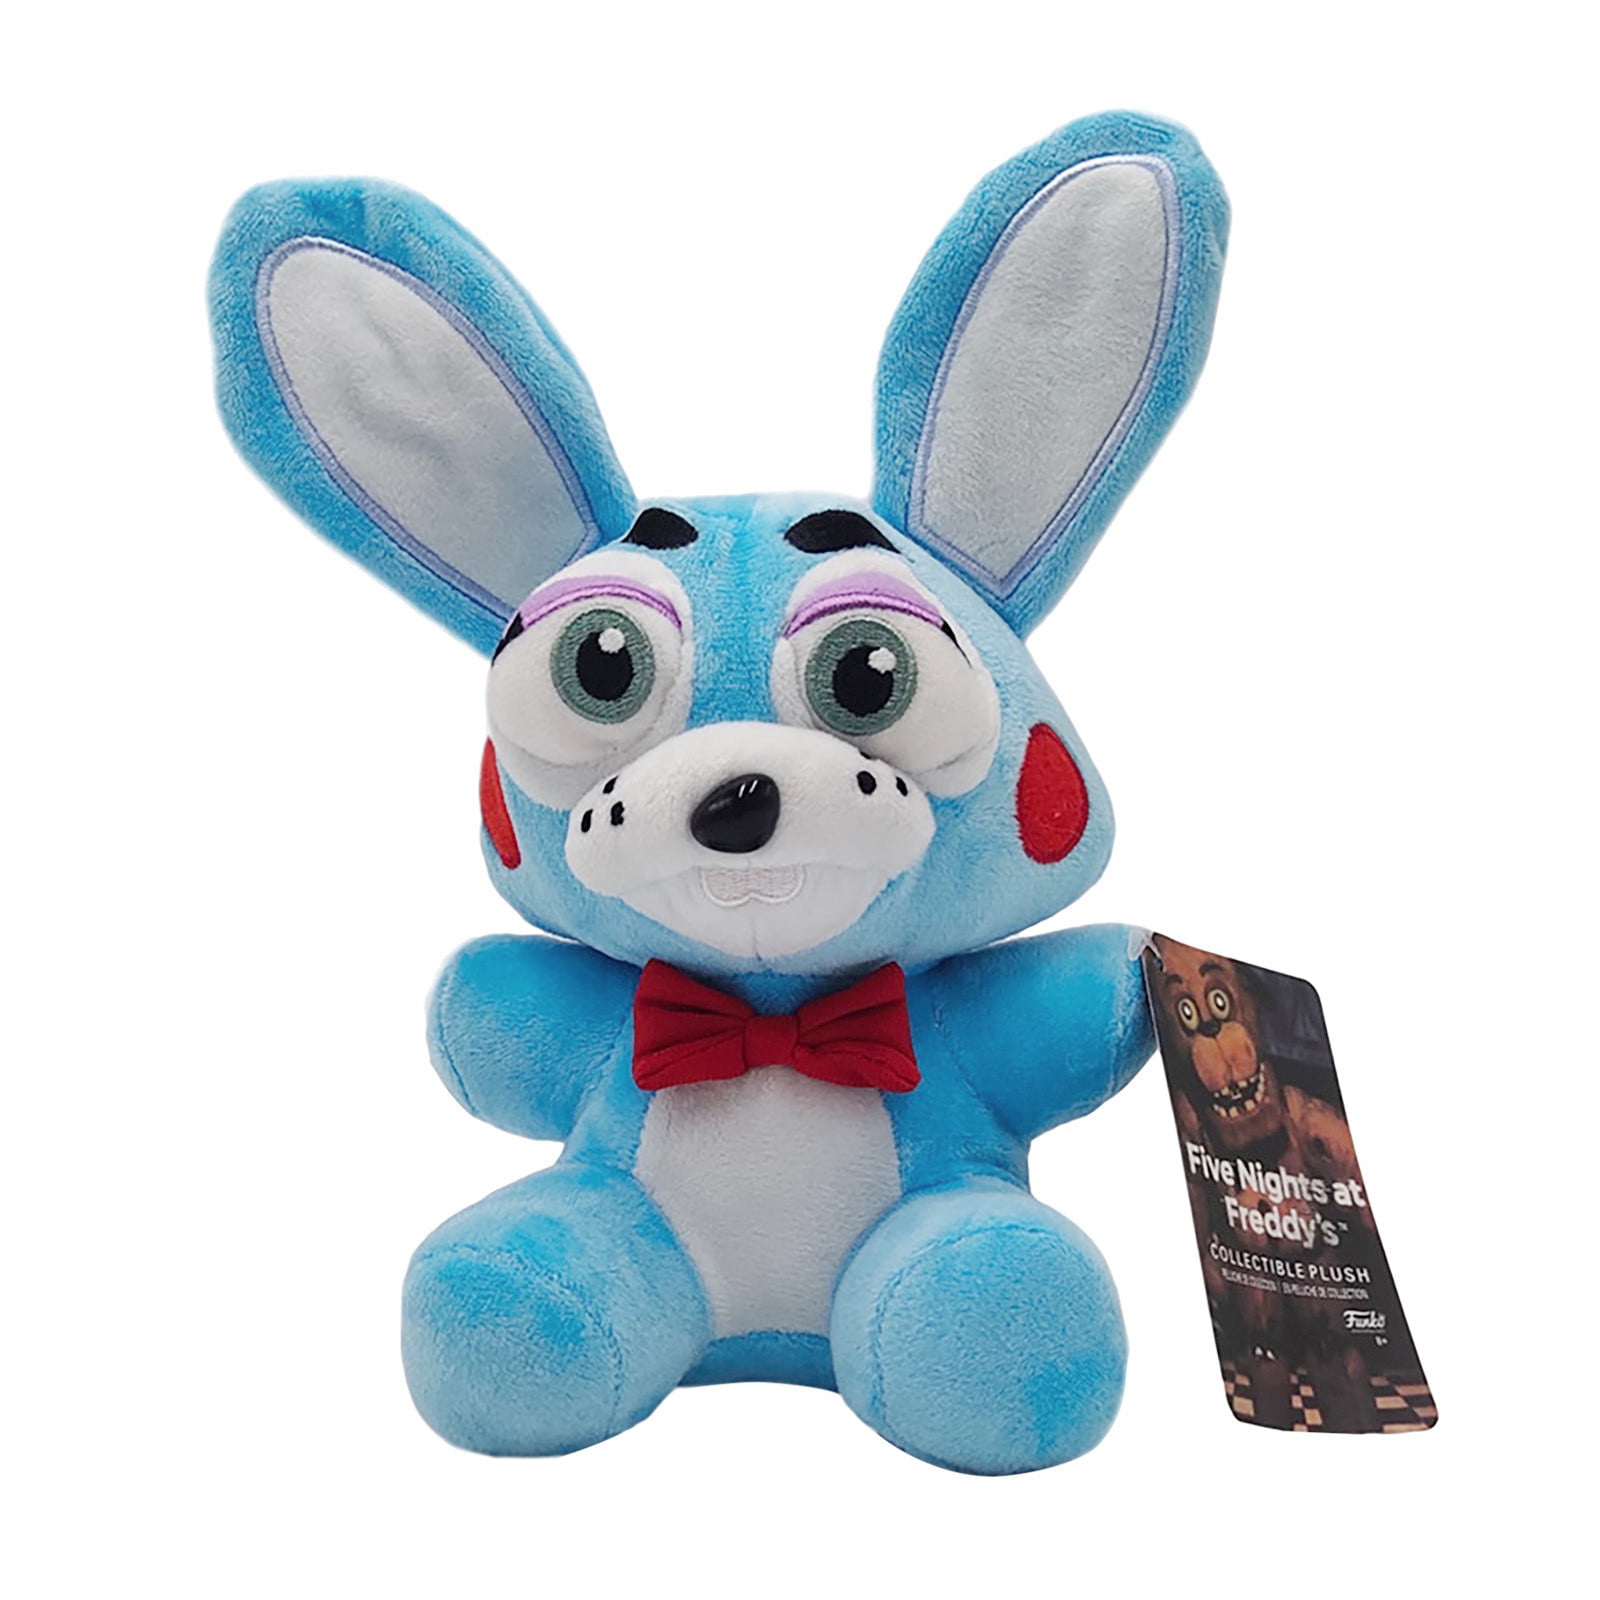 FNAF Sanshee Plushie Five Nights at Freddy's Toy Plush Blue Rabbit Bonnie Doll 